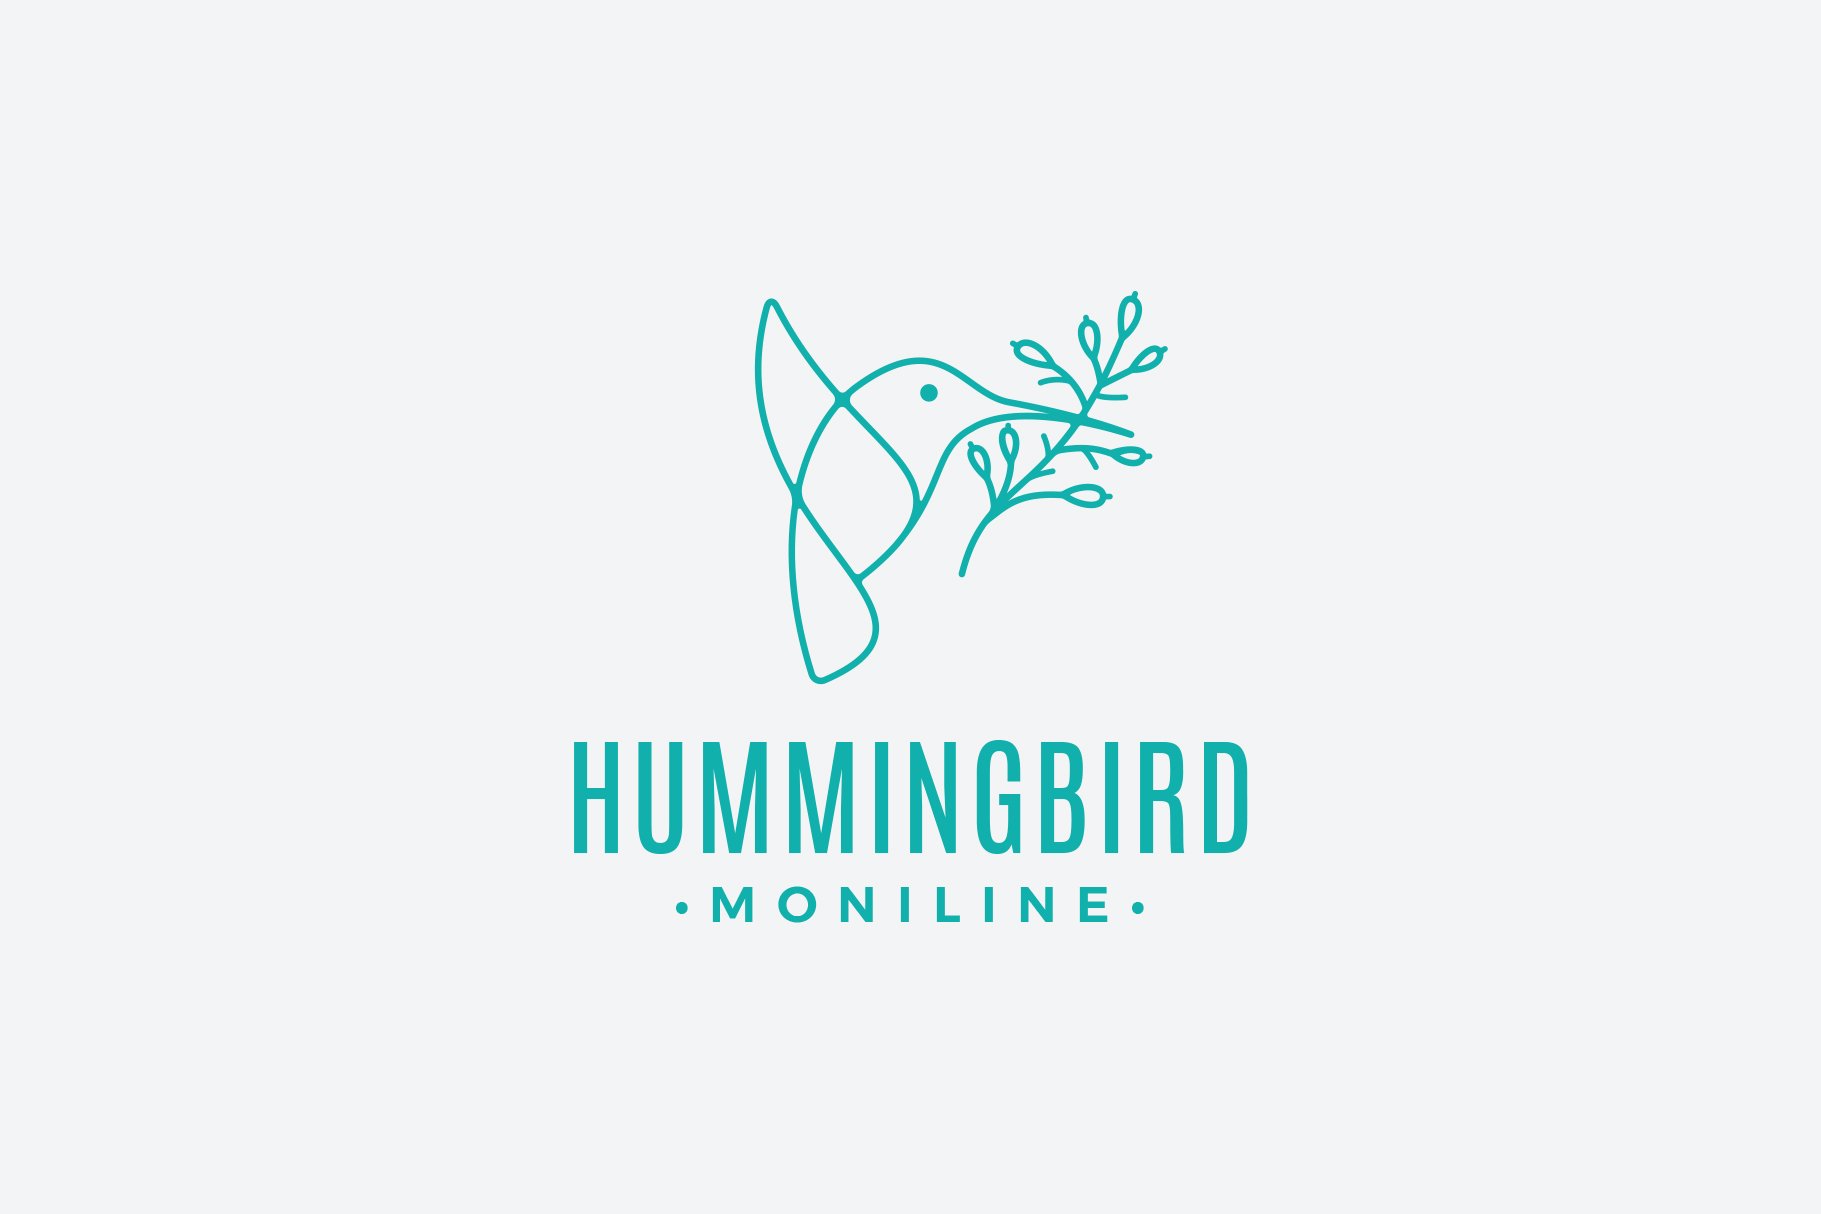 Hummingbird Monolone cover image.